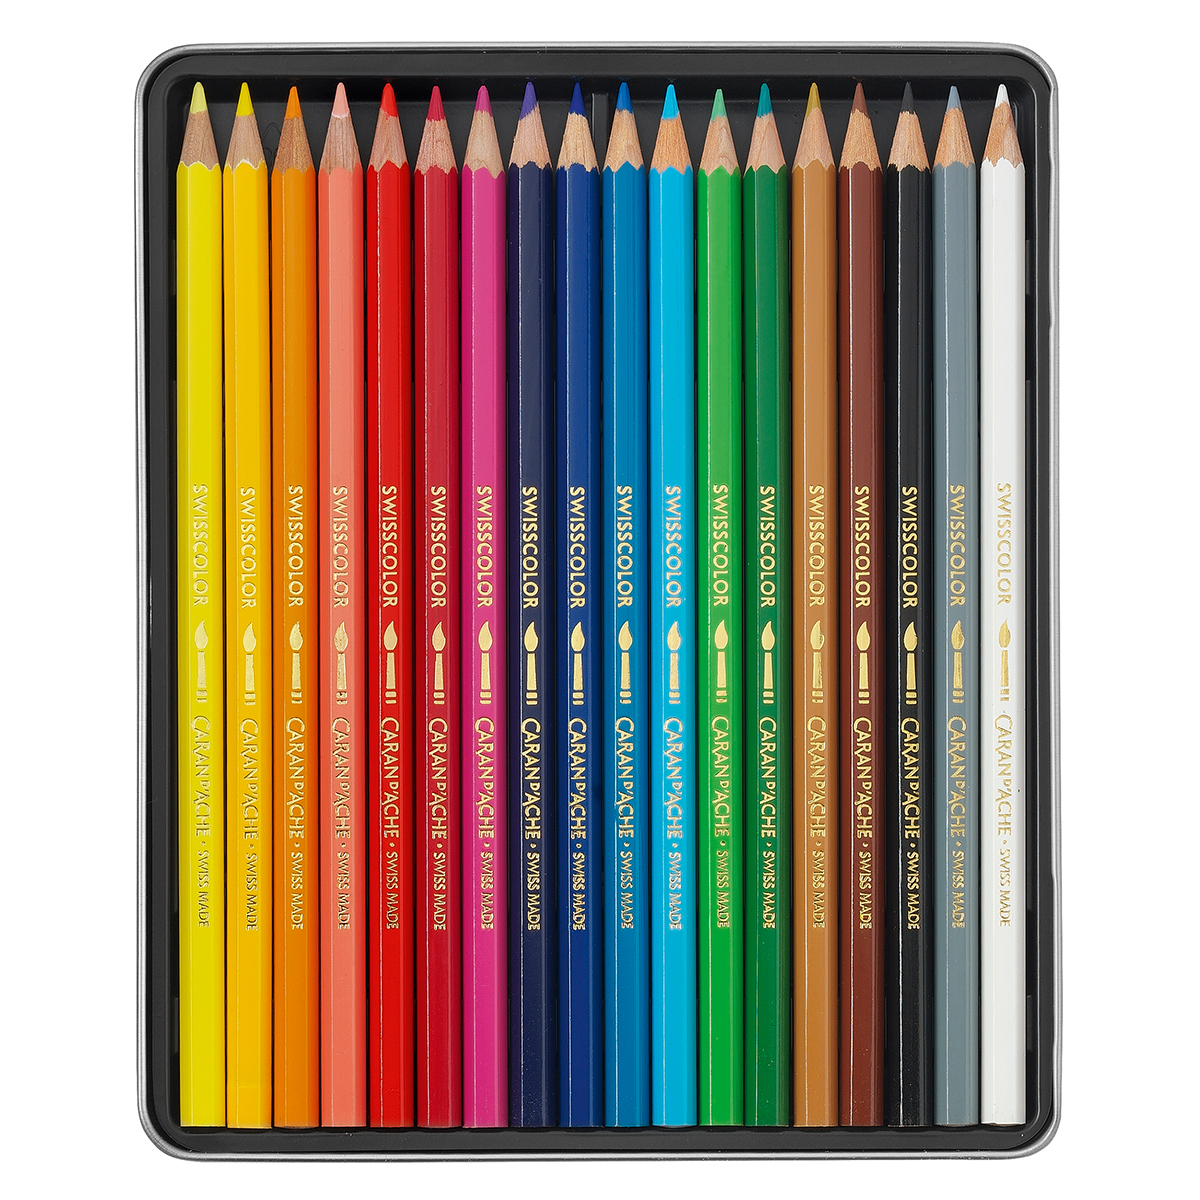 Swisscolor Aquarelle Set of 18 in the group Pens / Artist Pens / Watercolor Pencils at Pen Store (128913)